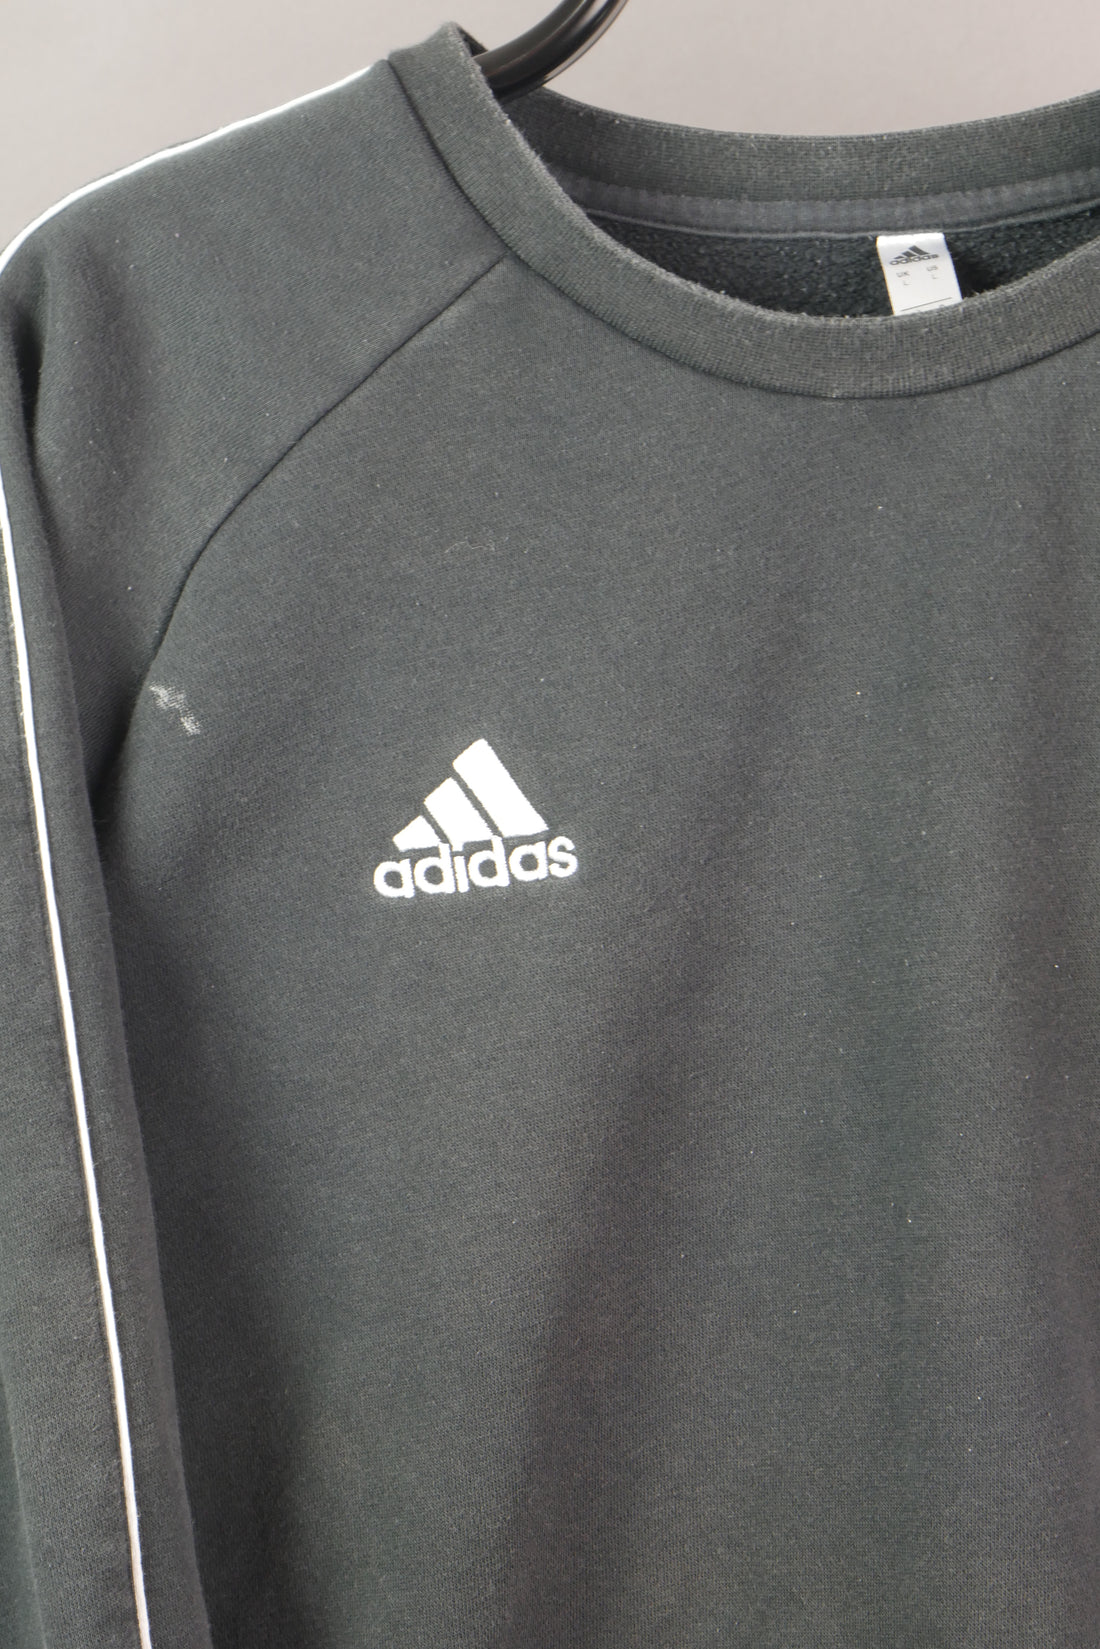 The Adidas Contrast Piping Sweatshirt (L)